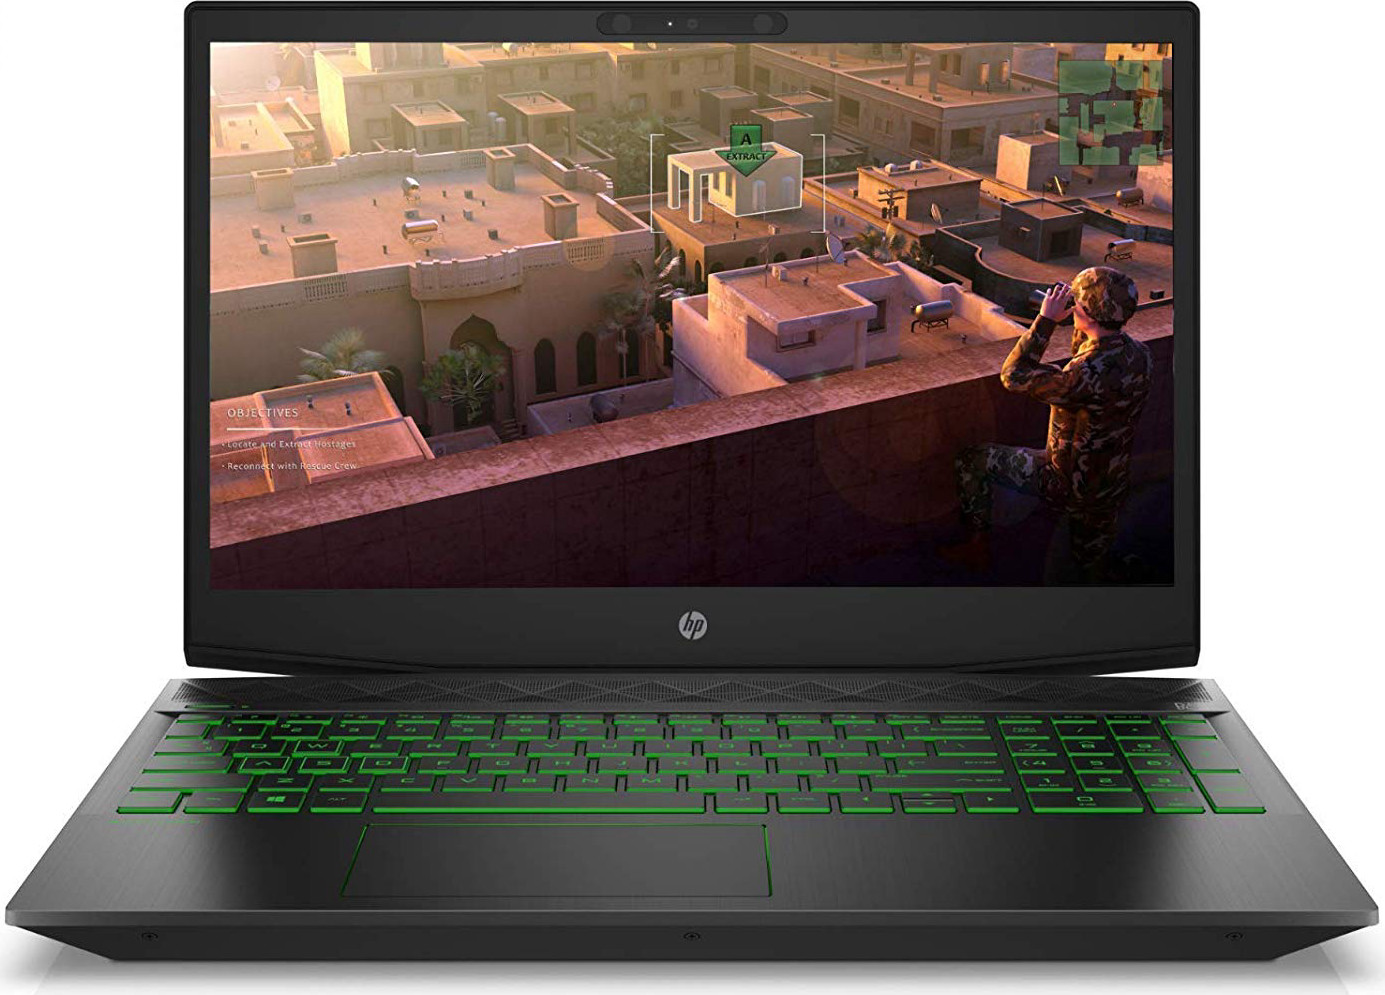 HP Pavilion Gaming Laptop 15.6" Core i5-8300H 15.6-inch Diagonal Full HD IPS Anti-Glare WLED-Backlit Display(1920 x 1080) with Narrow Bezel Design 8GB RAM + 1TB HDD Storage 15-cx0056wm